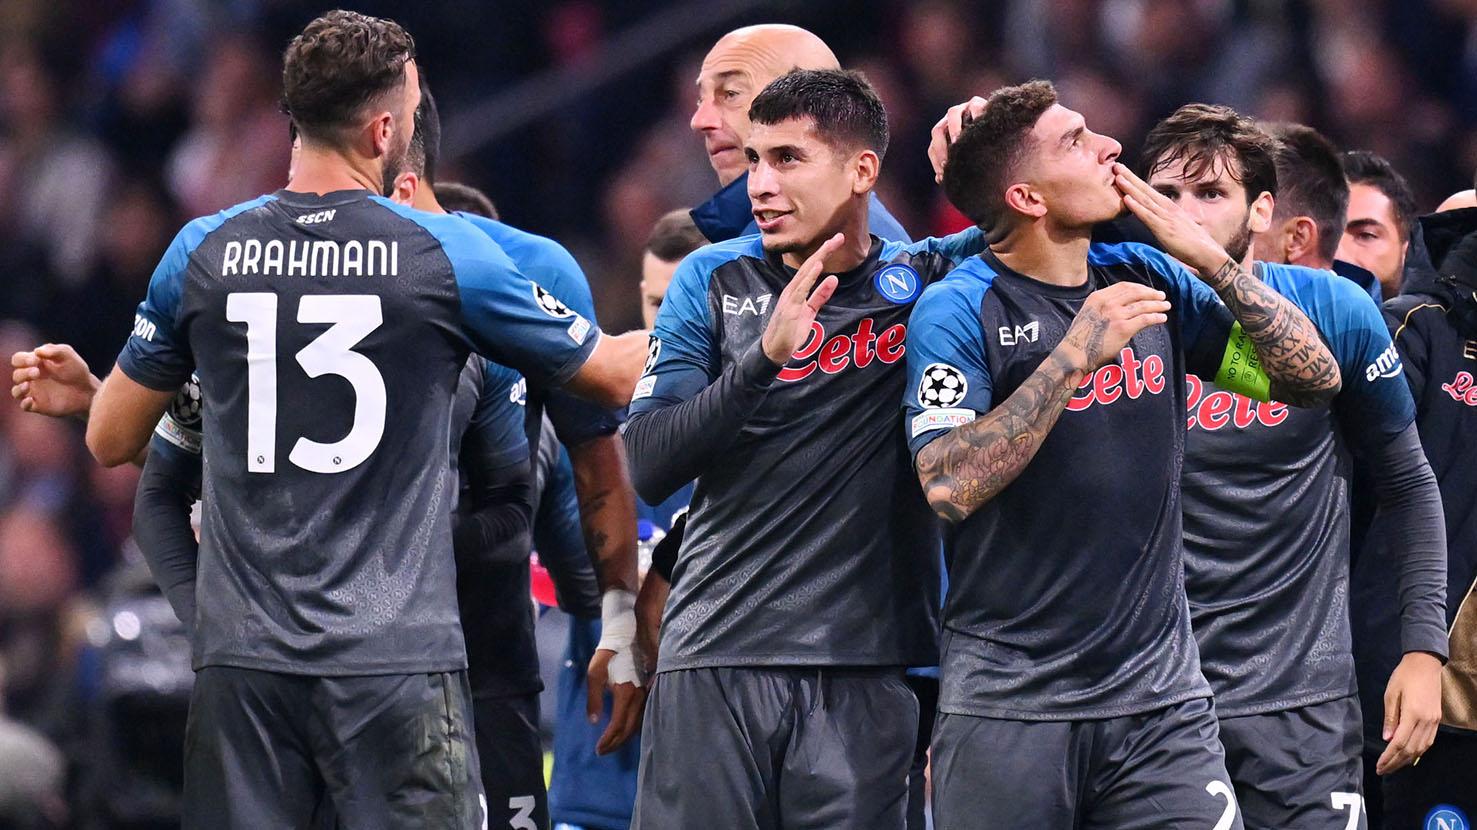 Napoli s-a impus prin golurile lui Raspadori (2), di Lorenzo, Zielinski, Kvaratshelia şi Simeone, după ce AJax a deschis scorul la Amsterdam prin Kudus